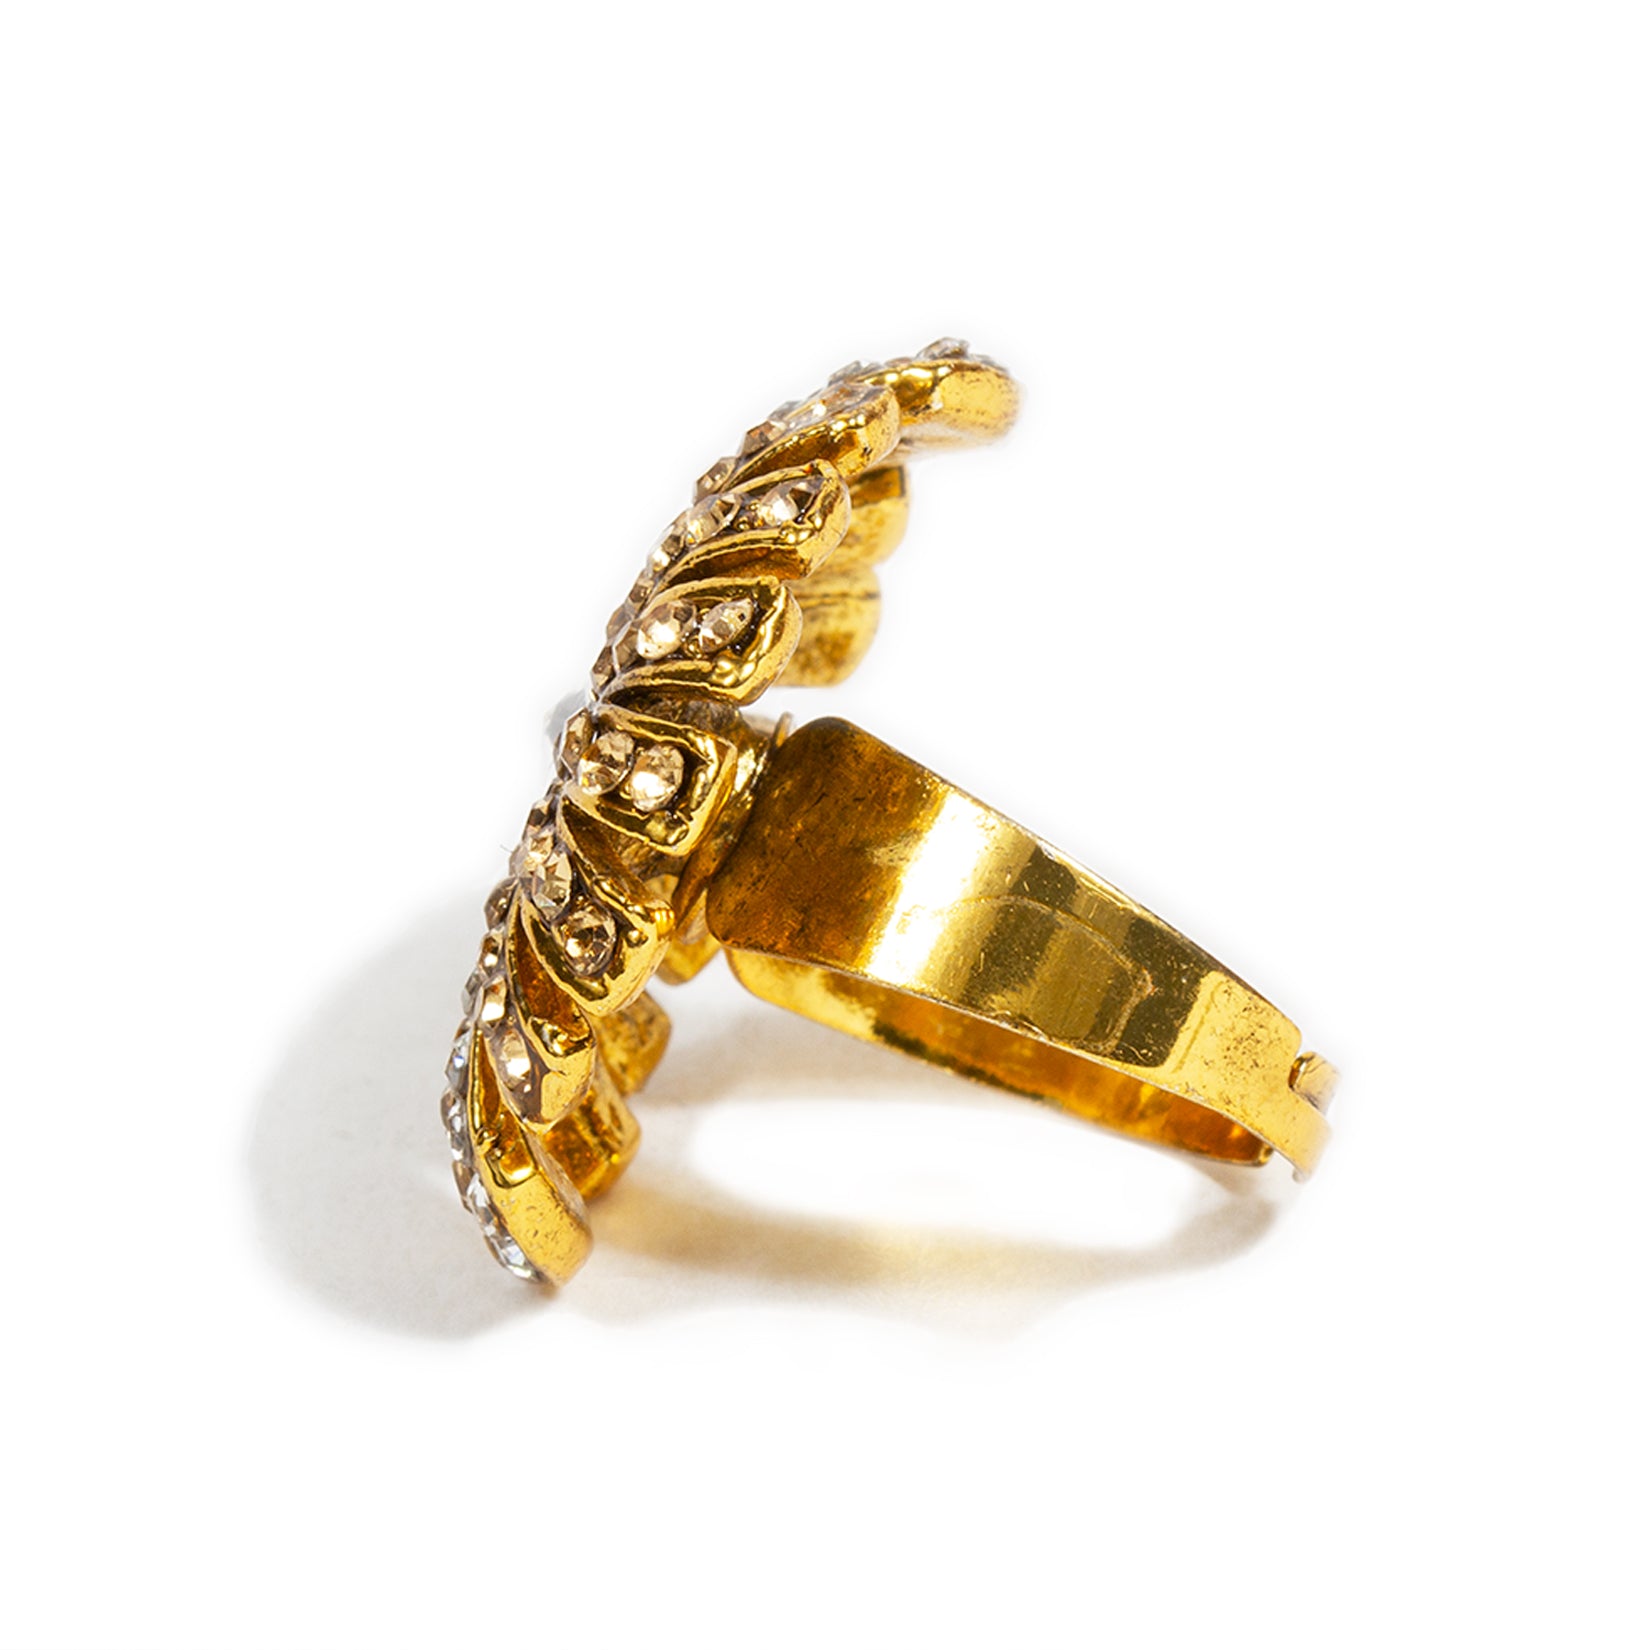 14K Yellow Gold Diamond Double Flower Ring